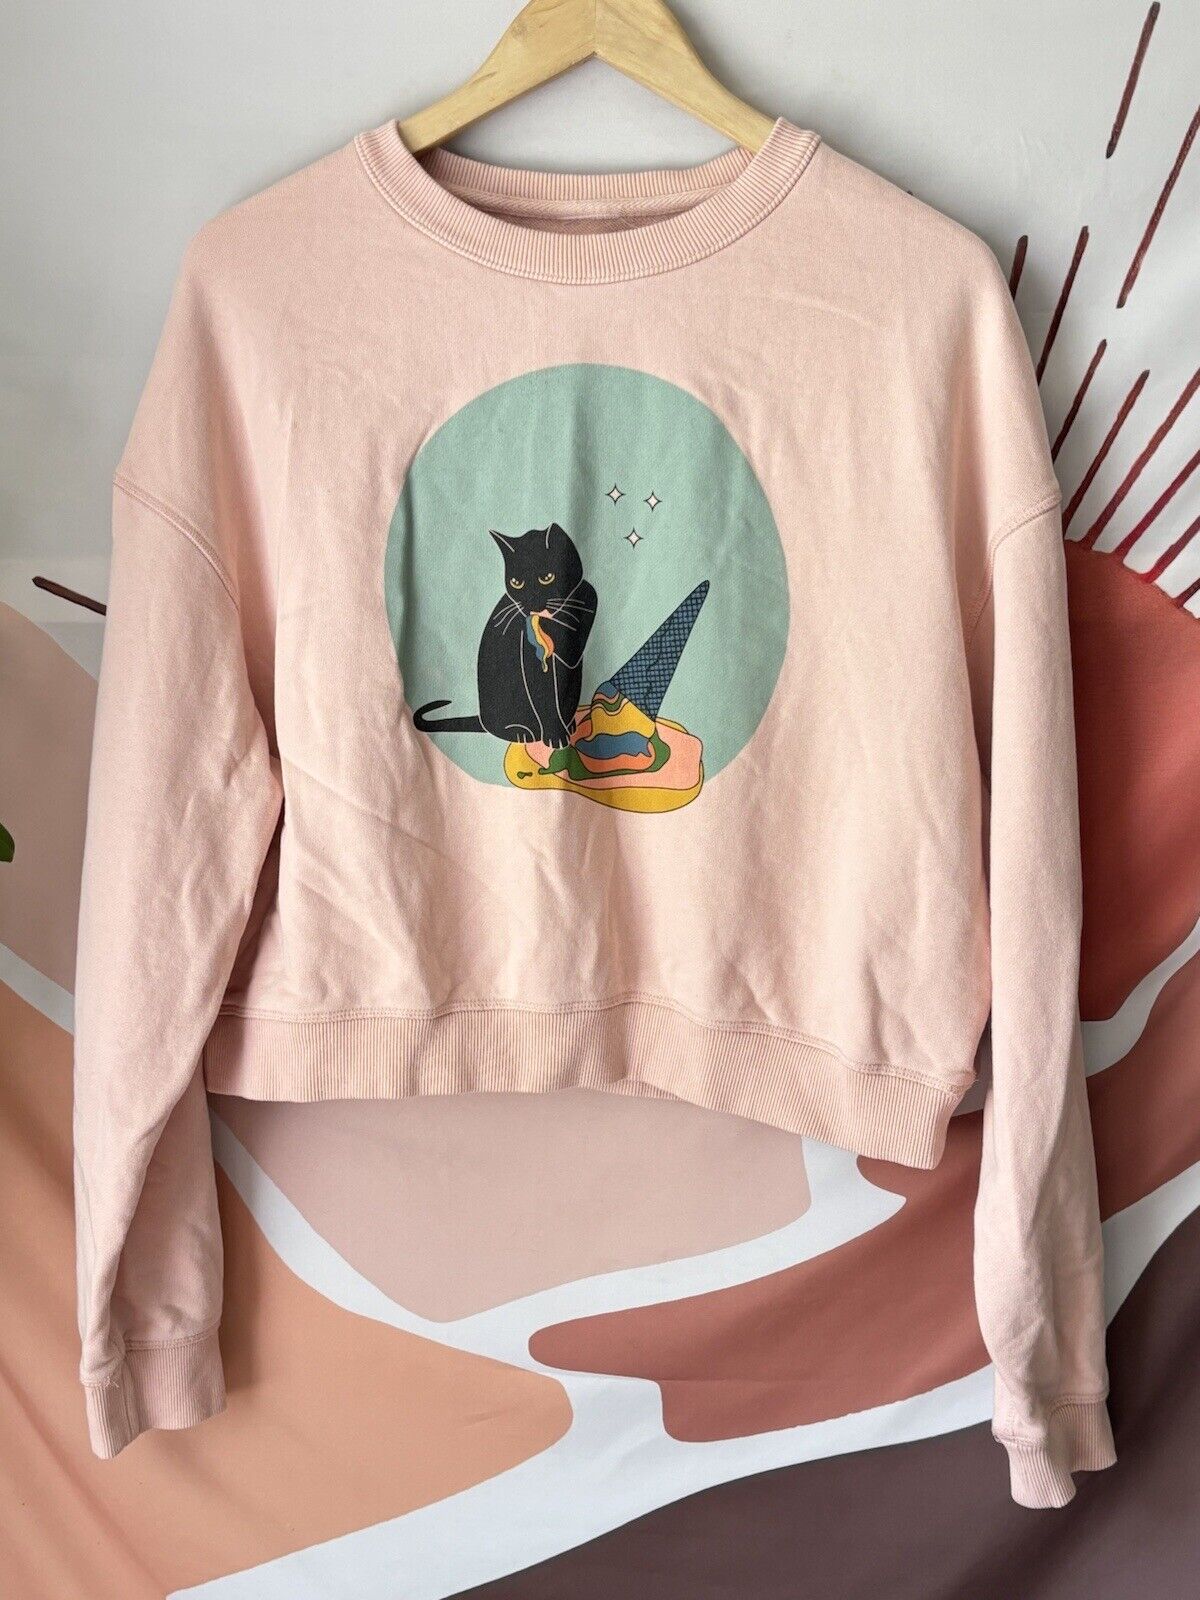 OBSIDIOPOLIS Yum Crop Sweatshirt Size S Small Cat - image 1